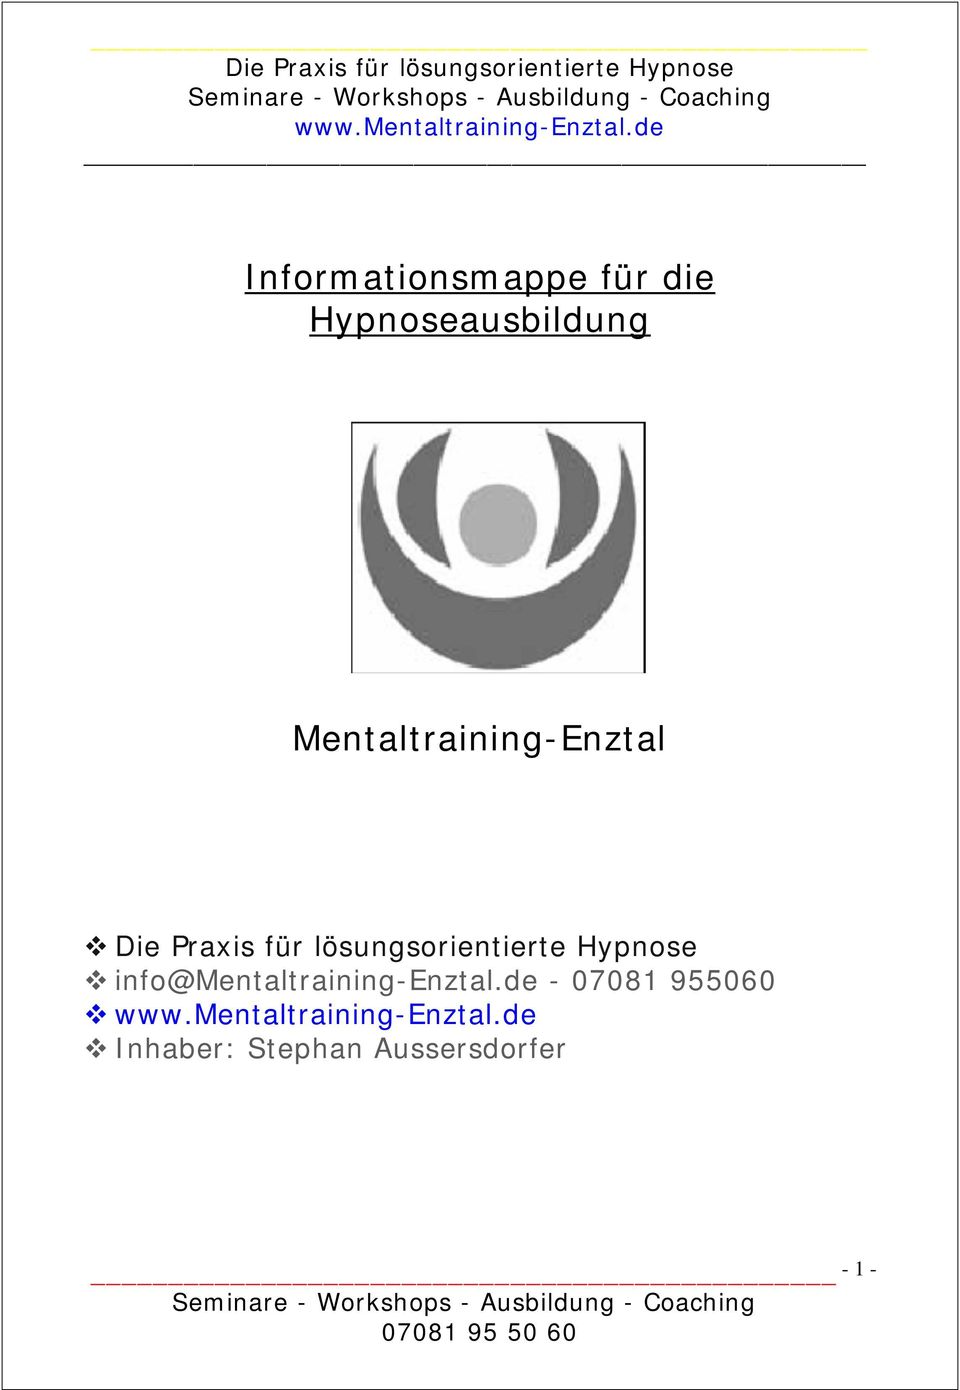 Mentaltraining-Enztal